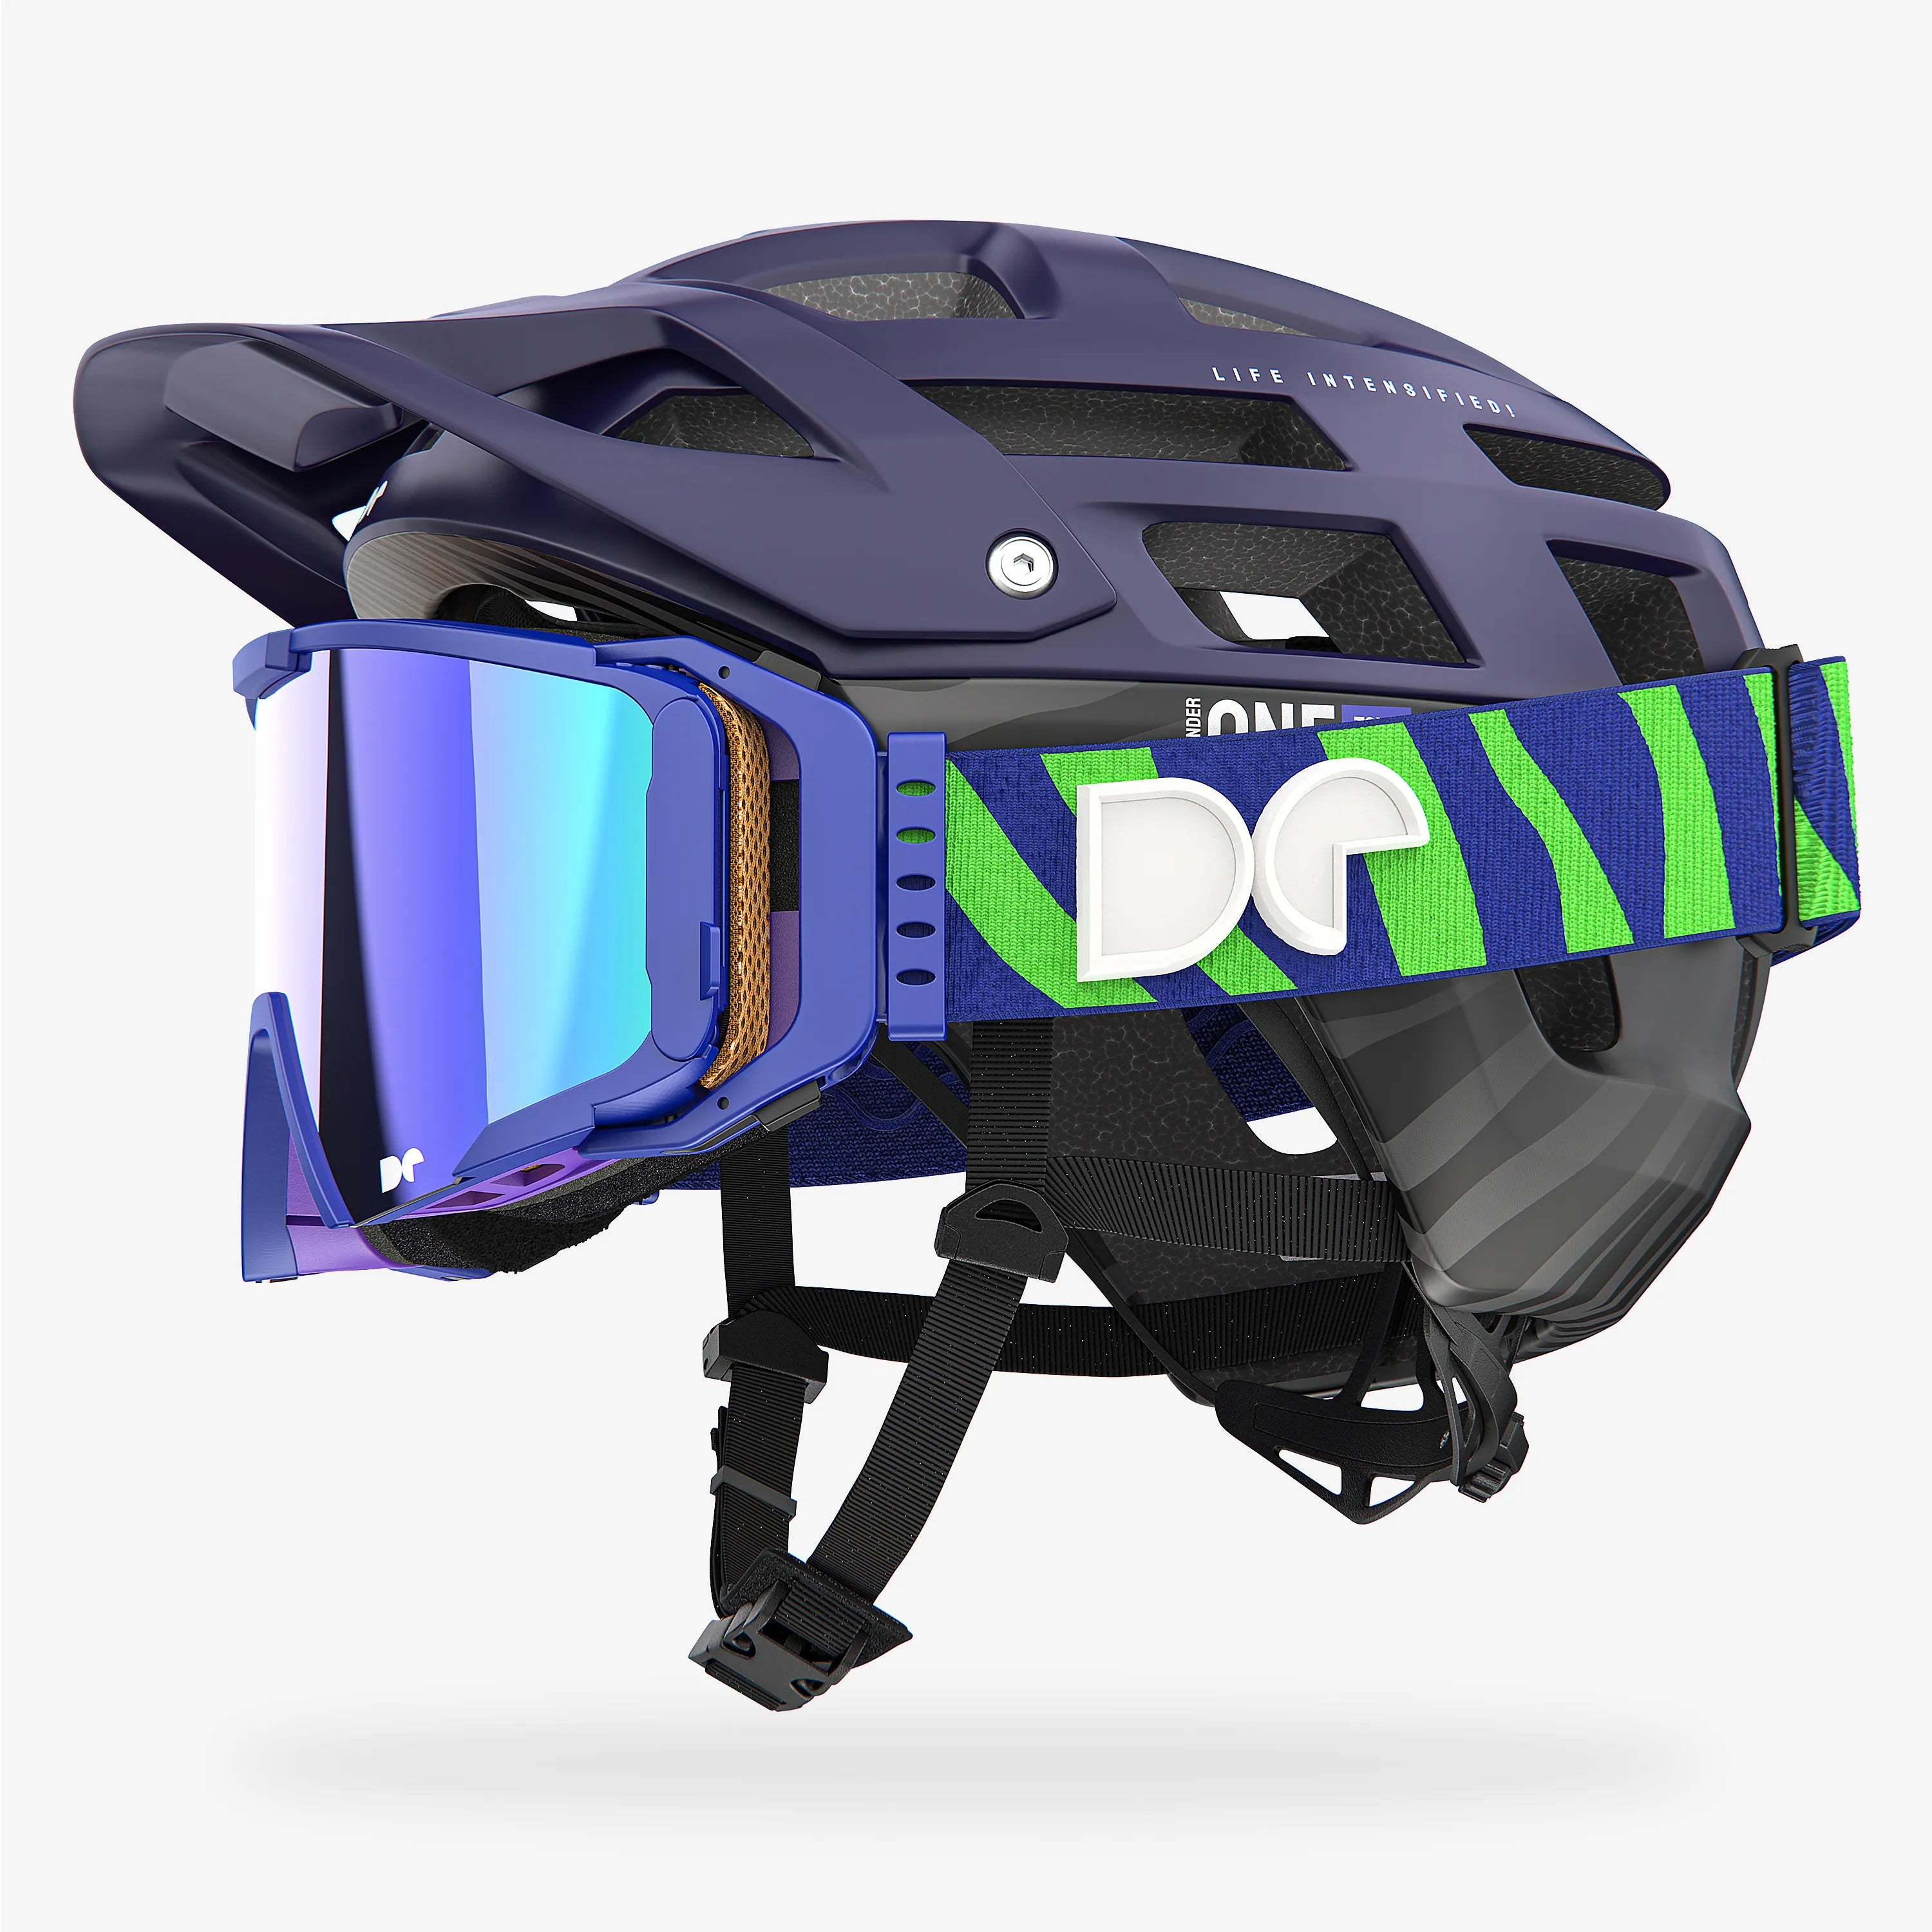 Casco de bicicleta de montaña Defender One Tour morado oscuro + gafas Sporter Boostup All Road